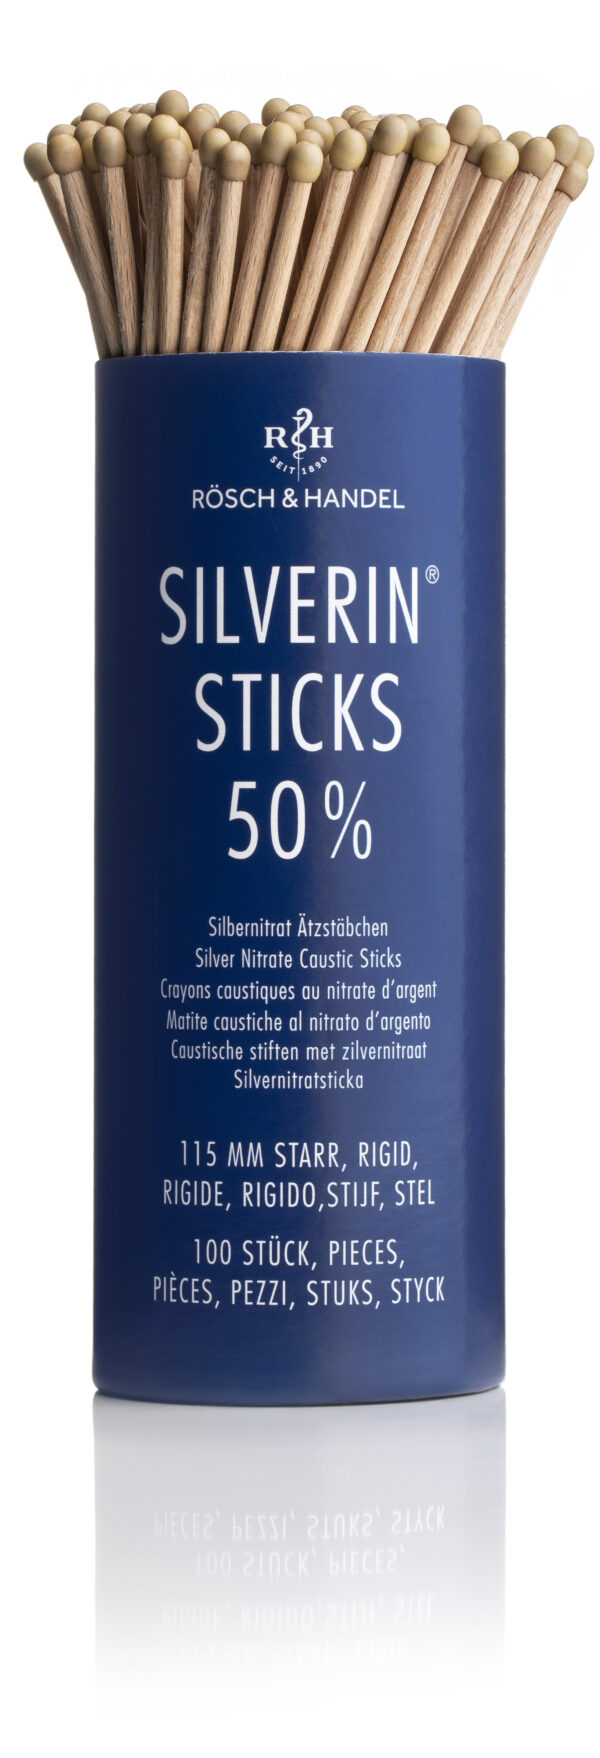 Silverin Sticks 50� 115mm starr 100 Stk. Stäbchen web BW 191029 600x1758 - Patyczki SILVERIN® 50% sztywne 100 sztuk